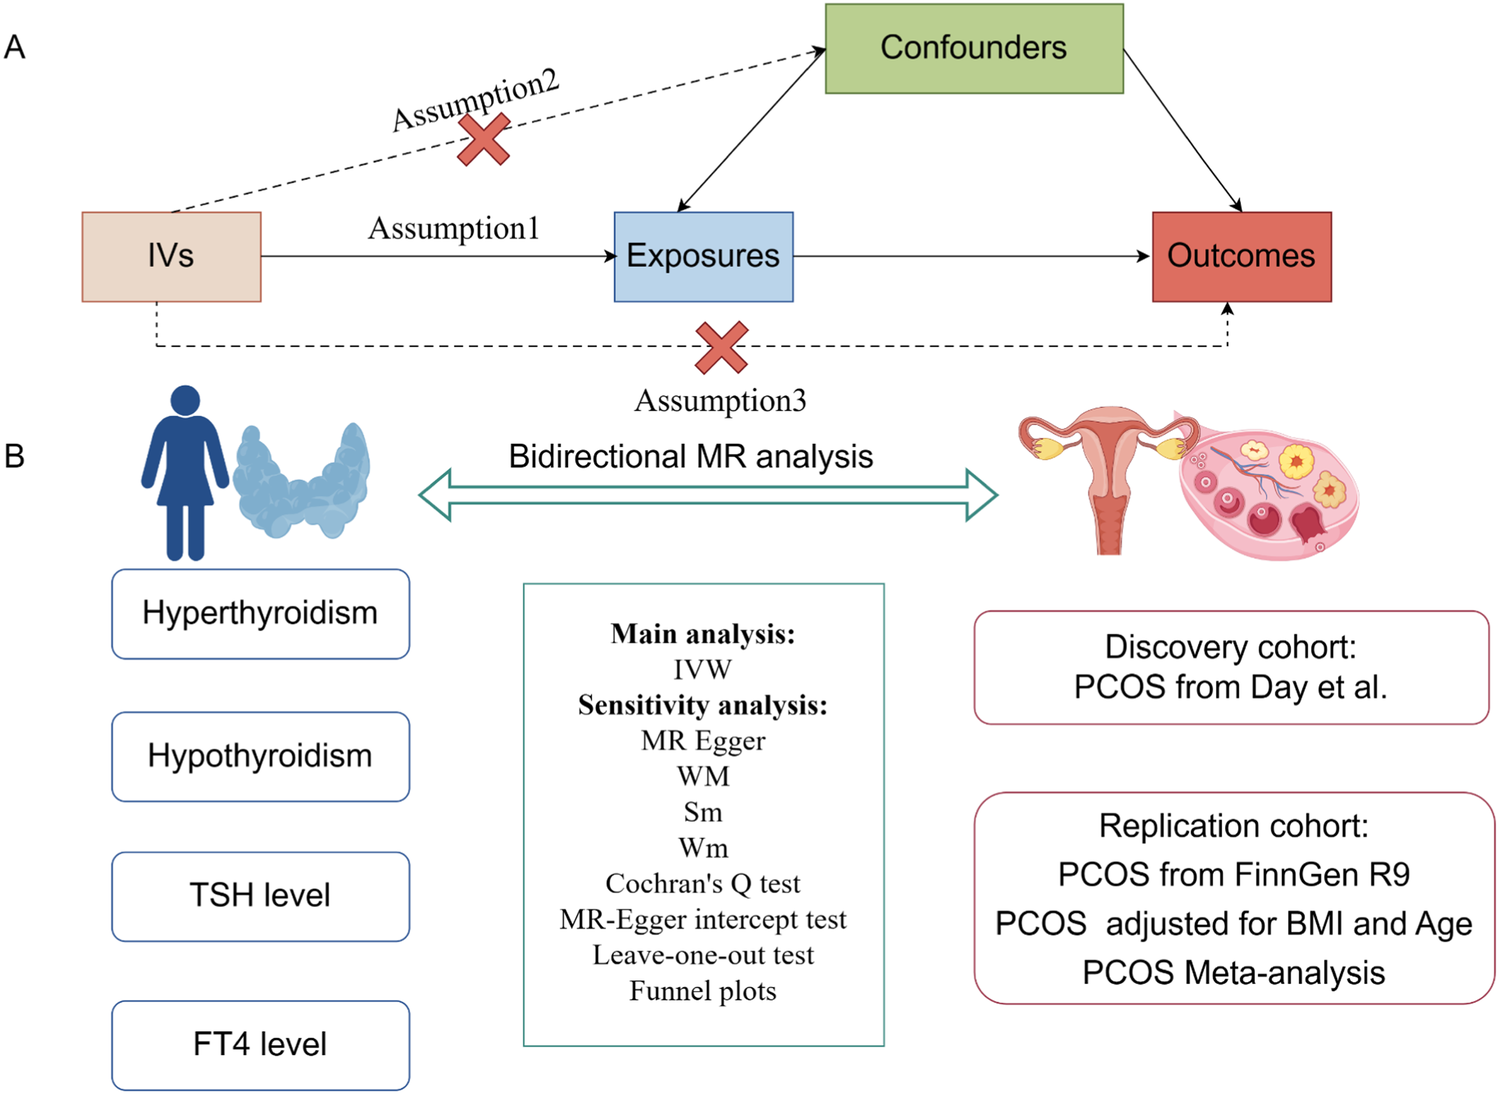 Is thyroid function associated with polycystic ovary syndrome? A bidirectional Mendelian randomization study